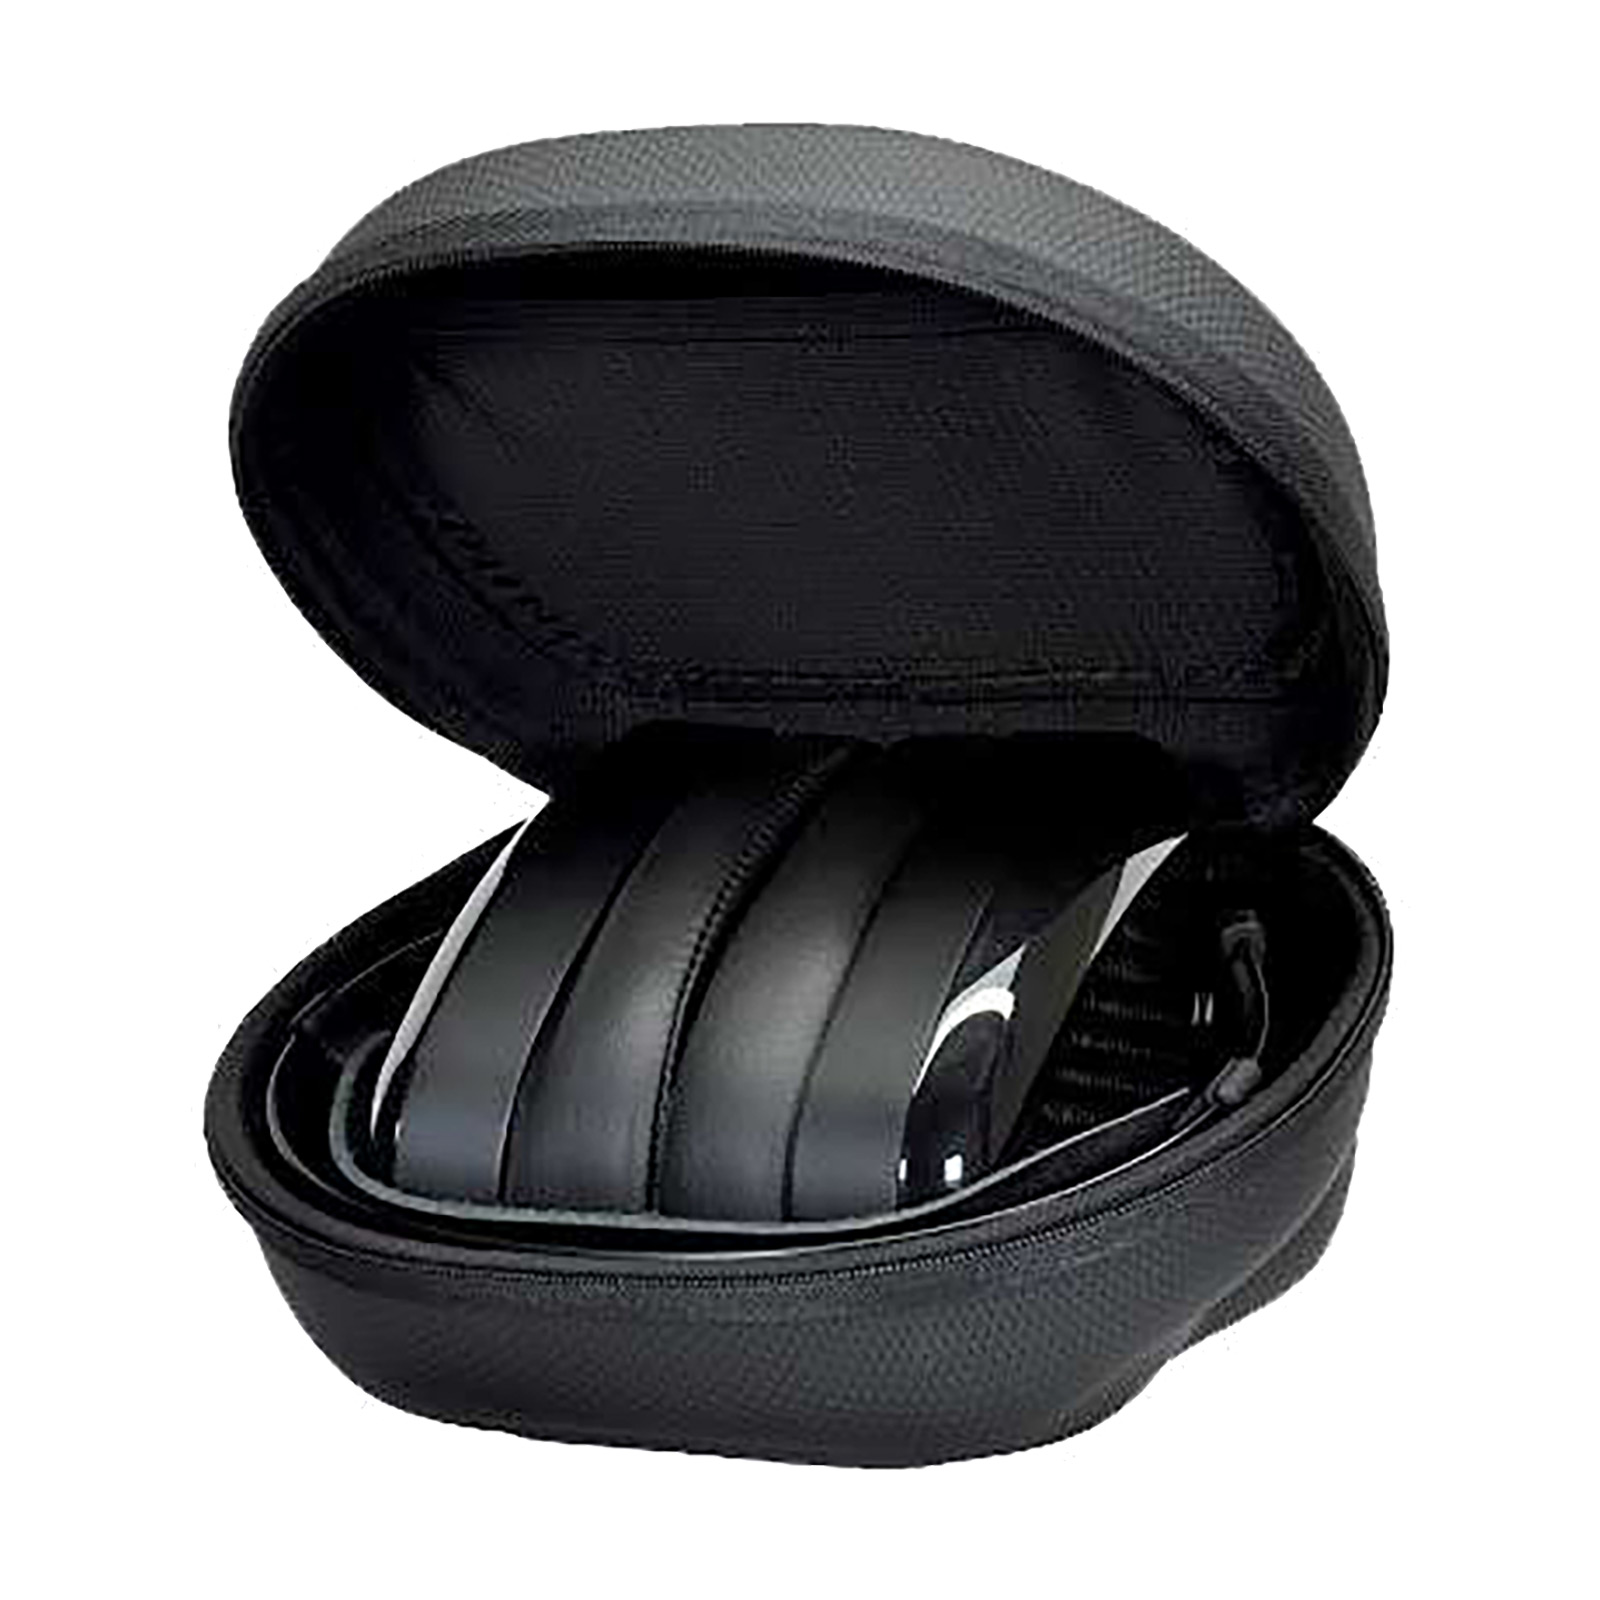 Aeon 2 Closed-Back NOIRE Over-Ear Foldable Headphones, by Dan Clark ...